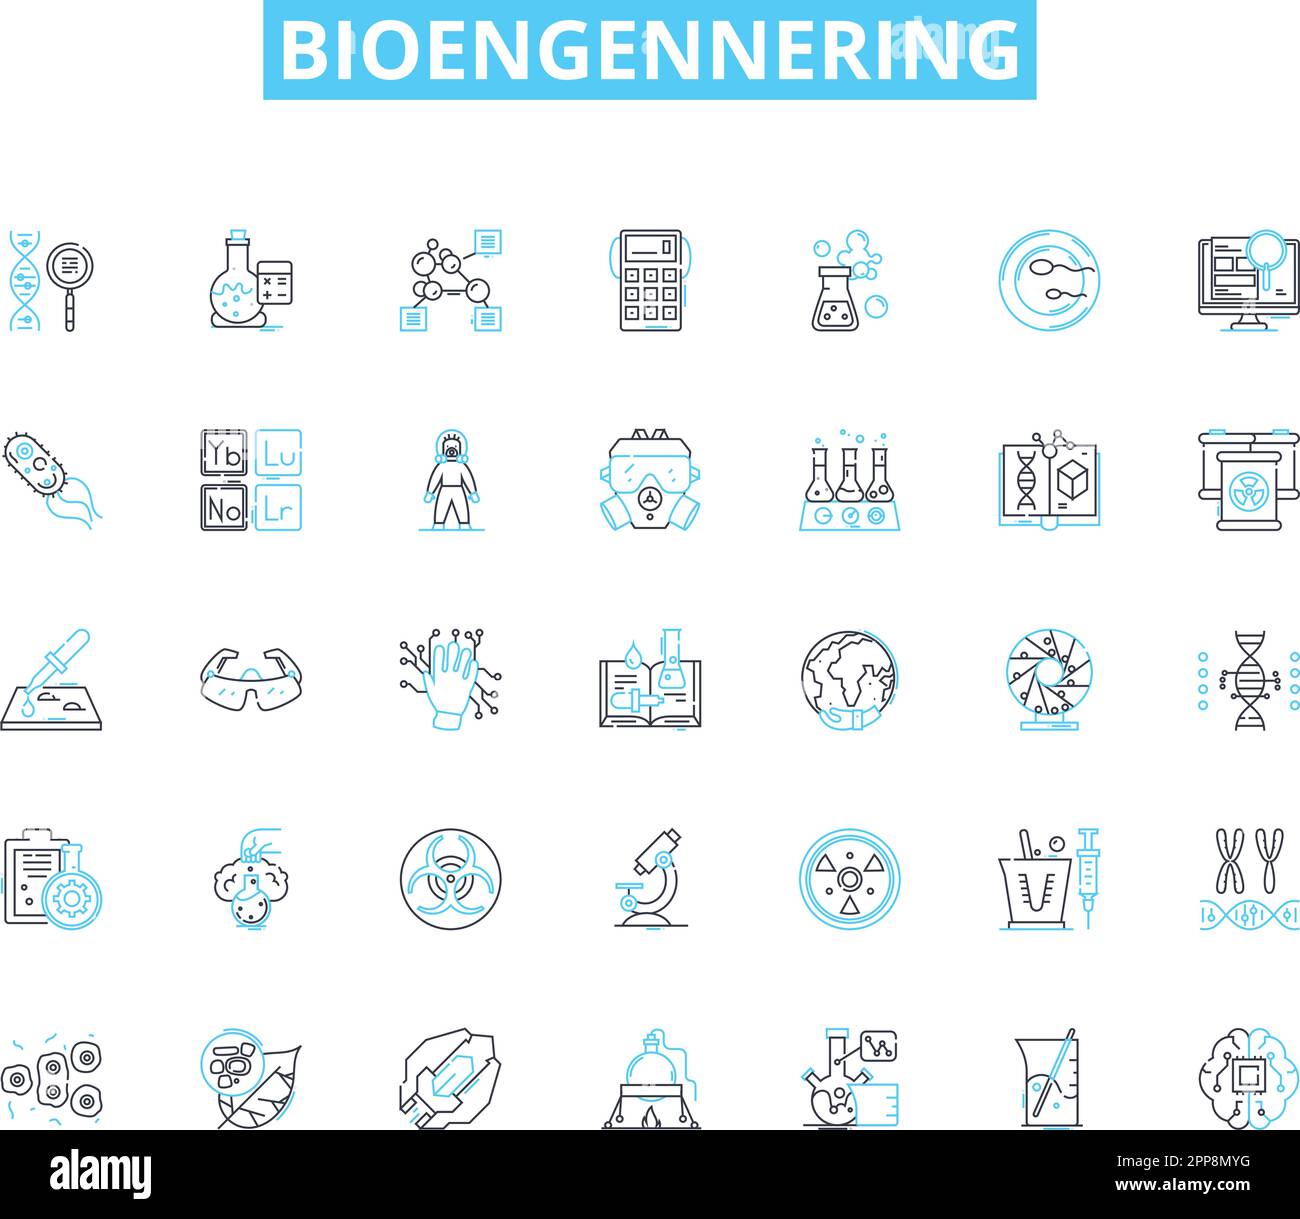 Bioengennering linear icons set. Biomaterials, Biomechanics, Bioprocessing, Bioreactors, Nanotechnology, Tissue engineering, Biocompatibility line Stock Vector